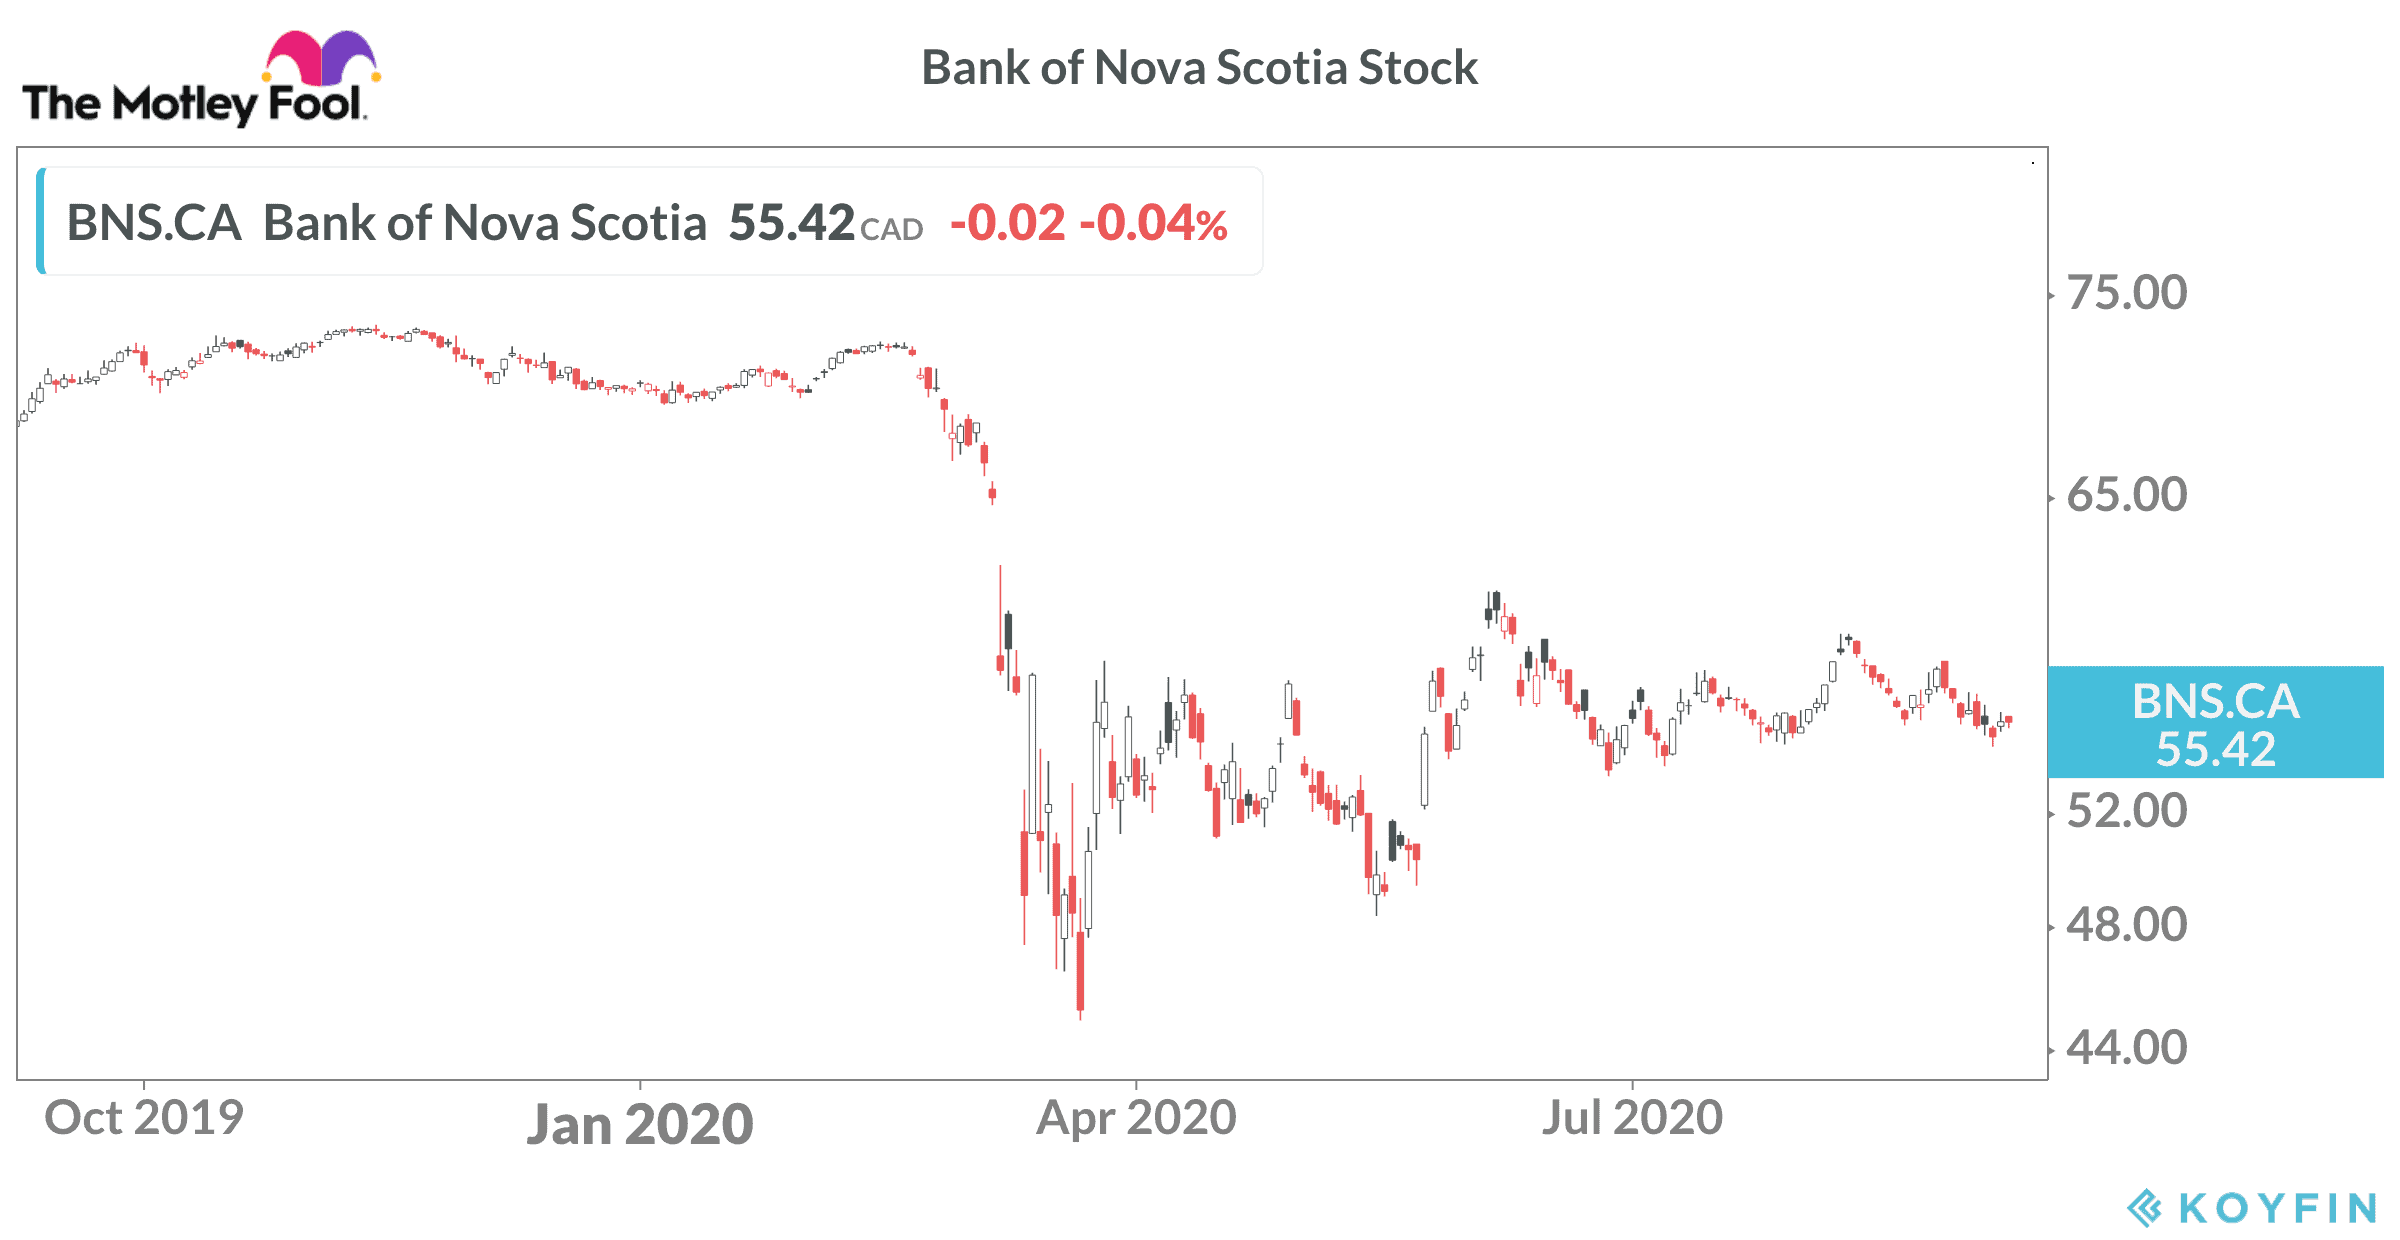 Bank of Nova Scotia stock